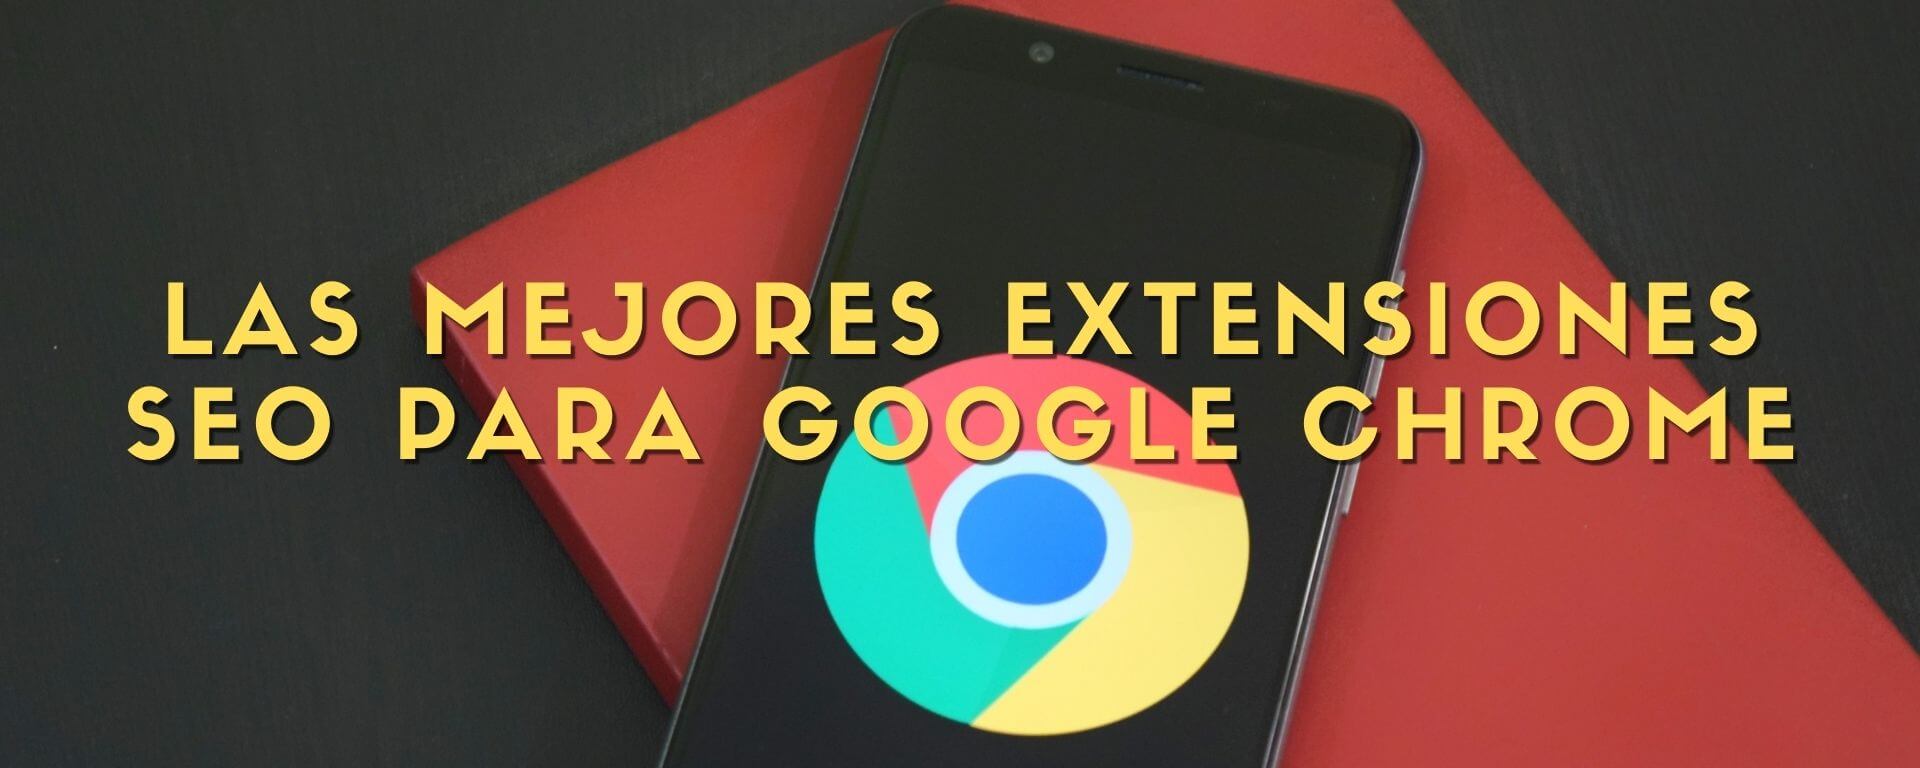 Las mejores extensiones de SEO para Google Chrome